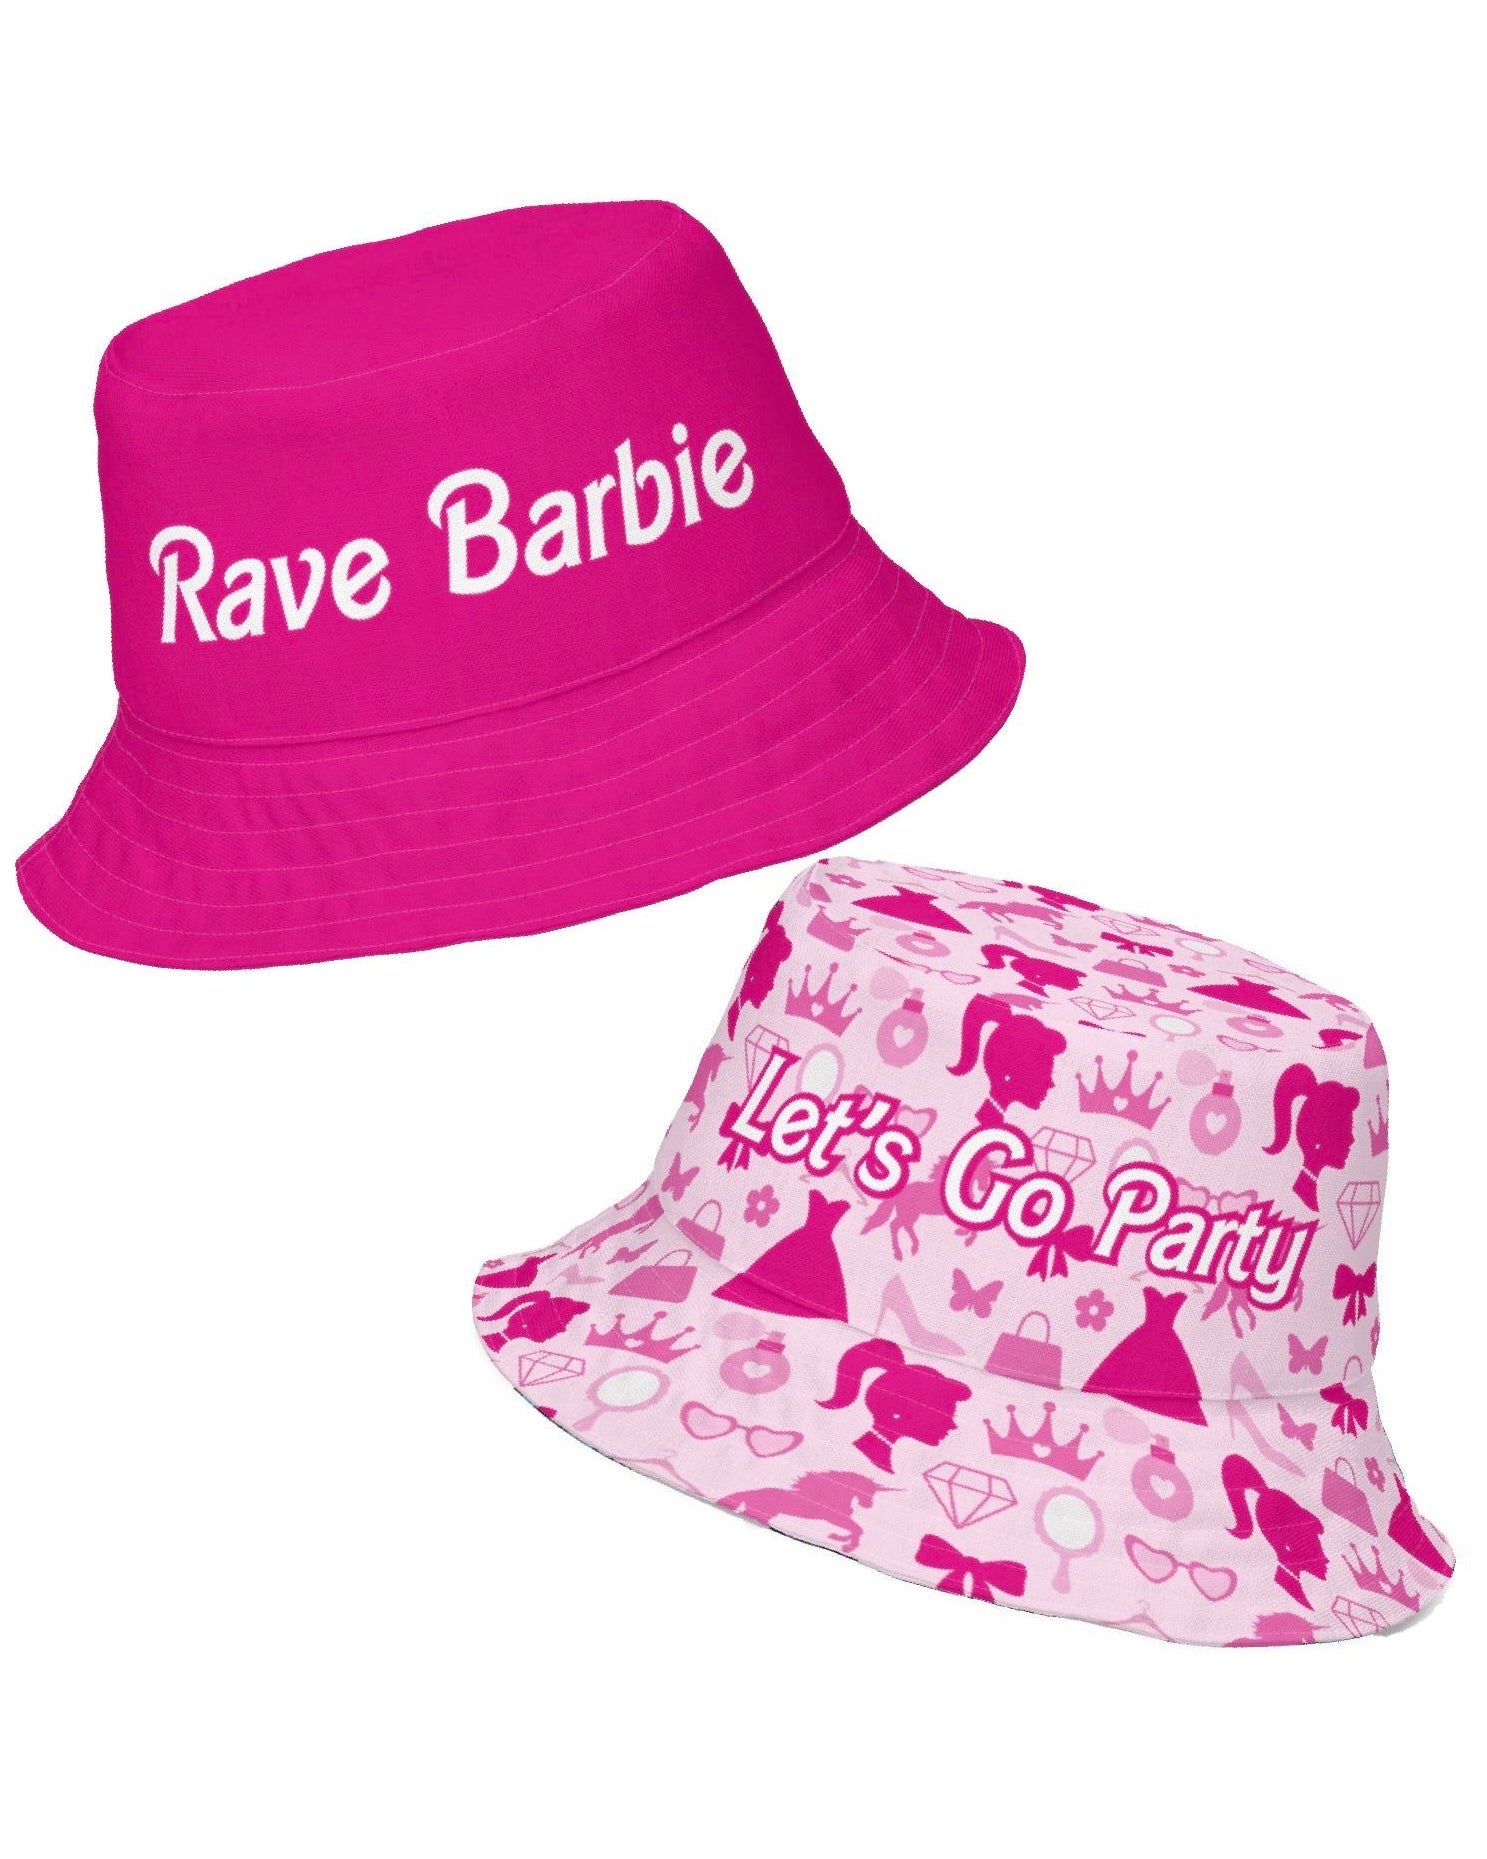 Let's Go Party & Rave Barbie Reversible Bucket Hat